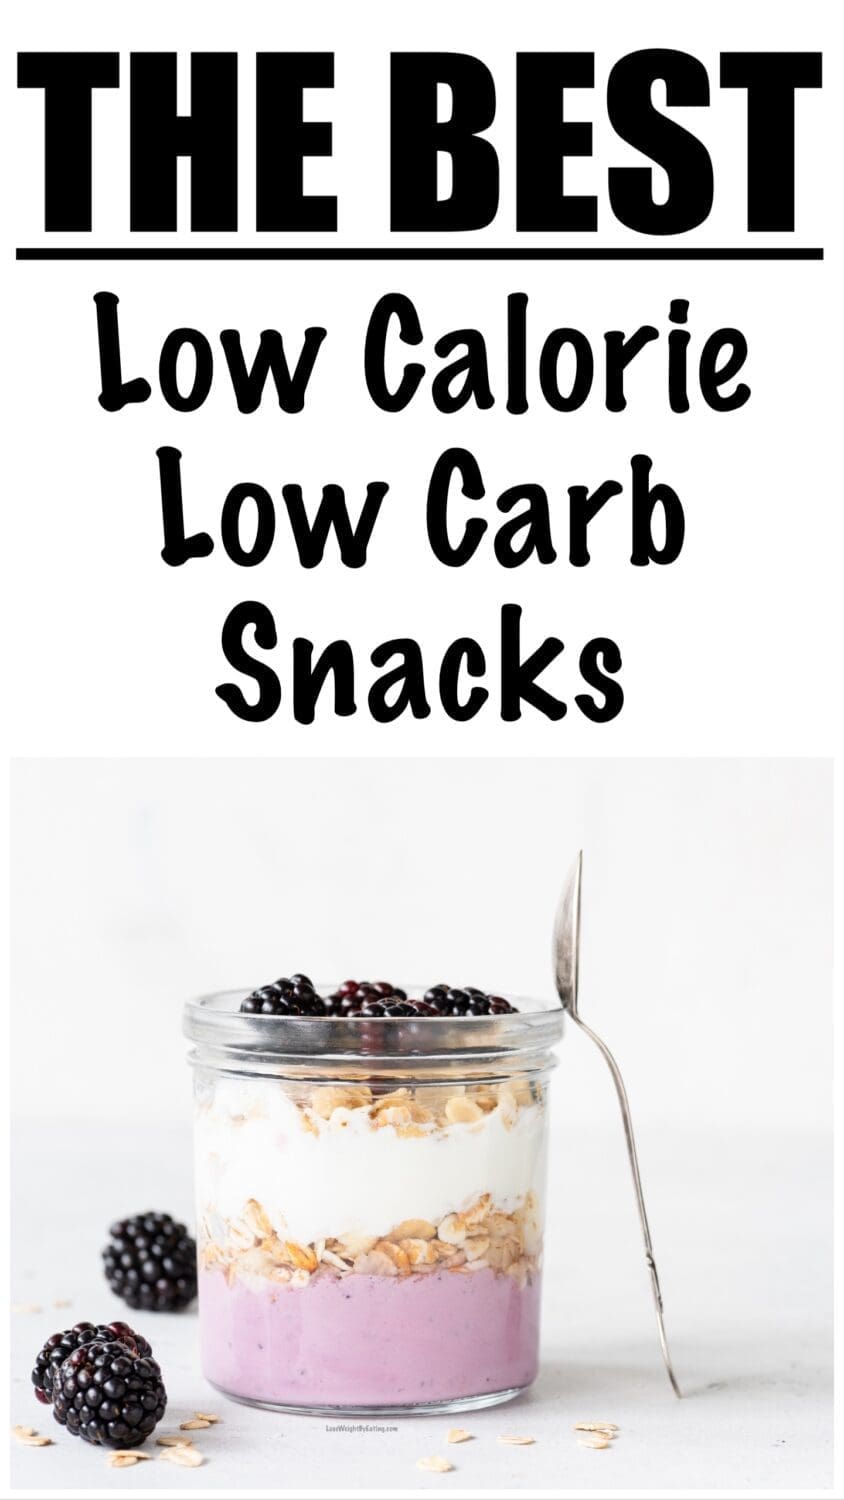 Low Calorie Low Carb Snacks